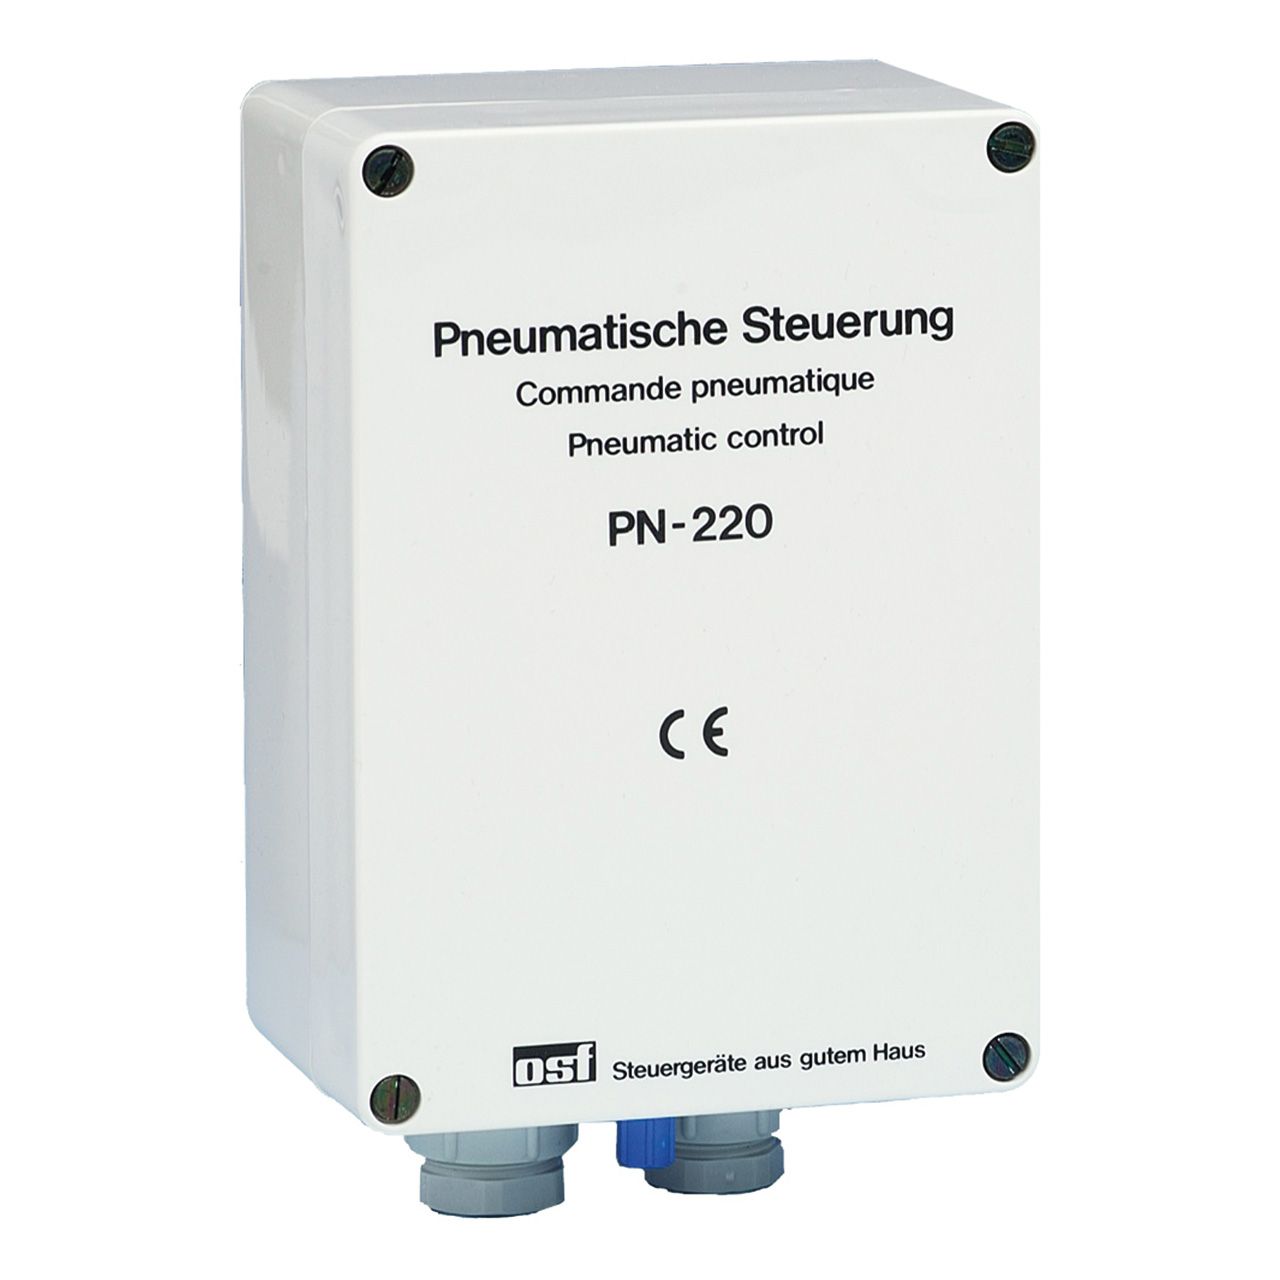 osf Pneumatic-Control PN-220-3 kW